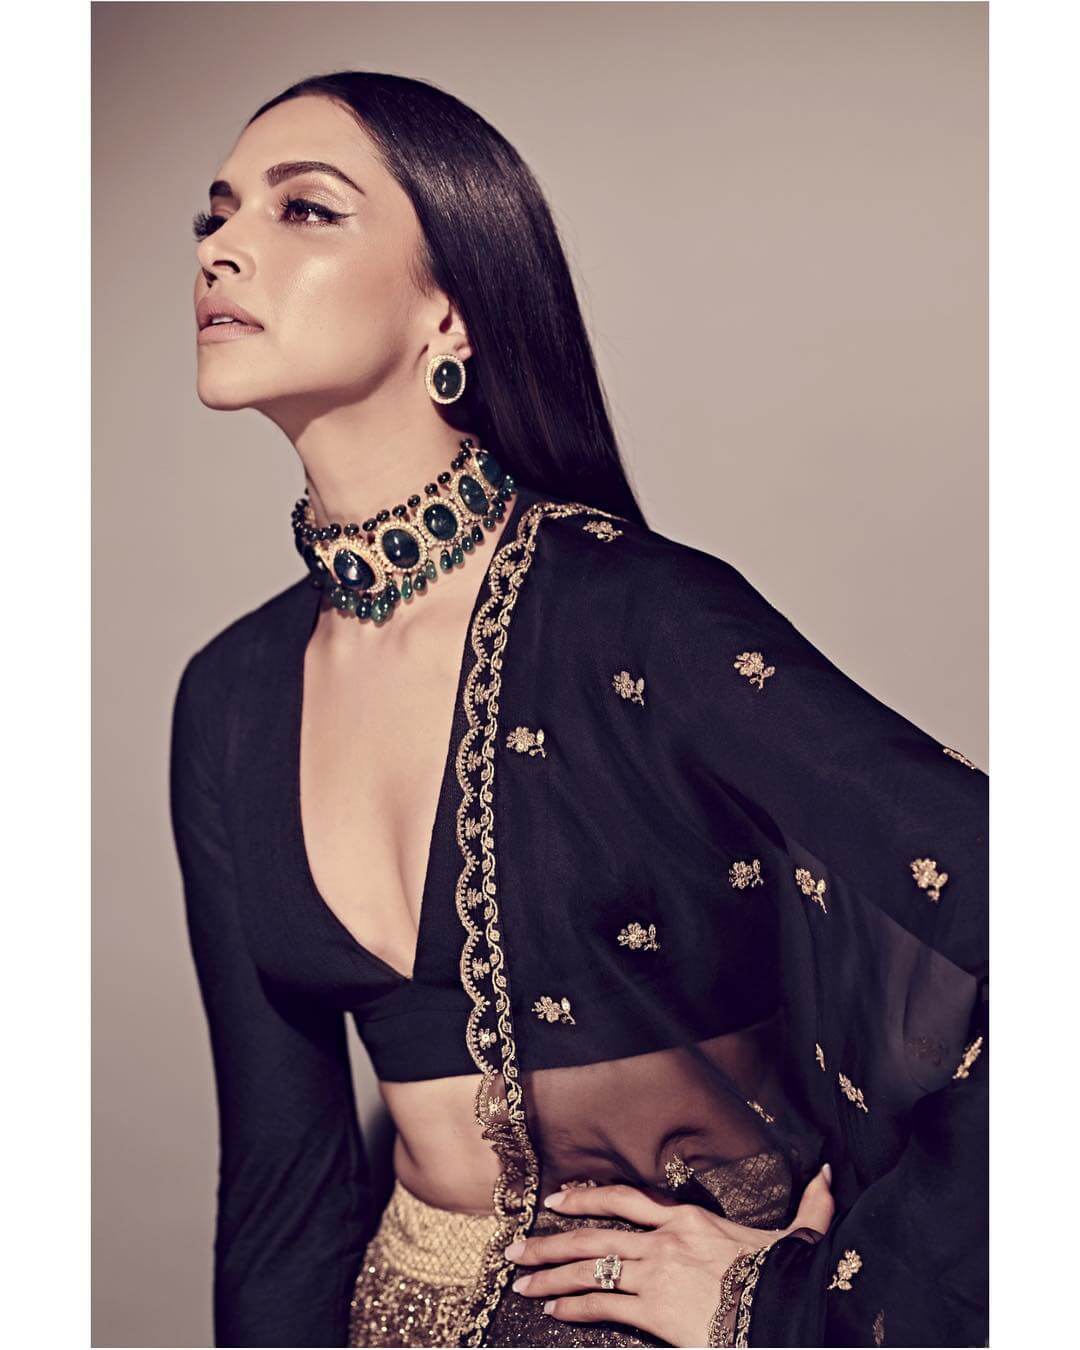 Deepika Padukone’s choker studded with black gems and earrings